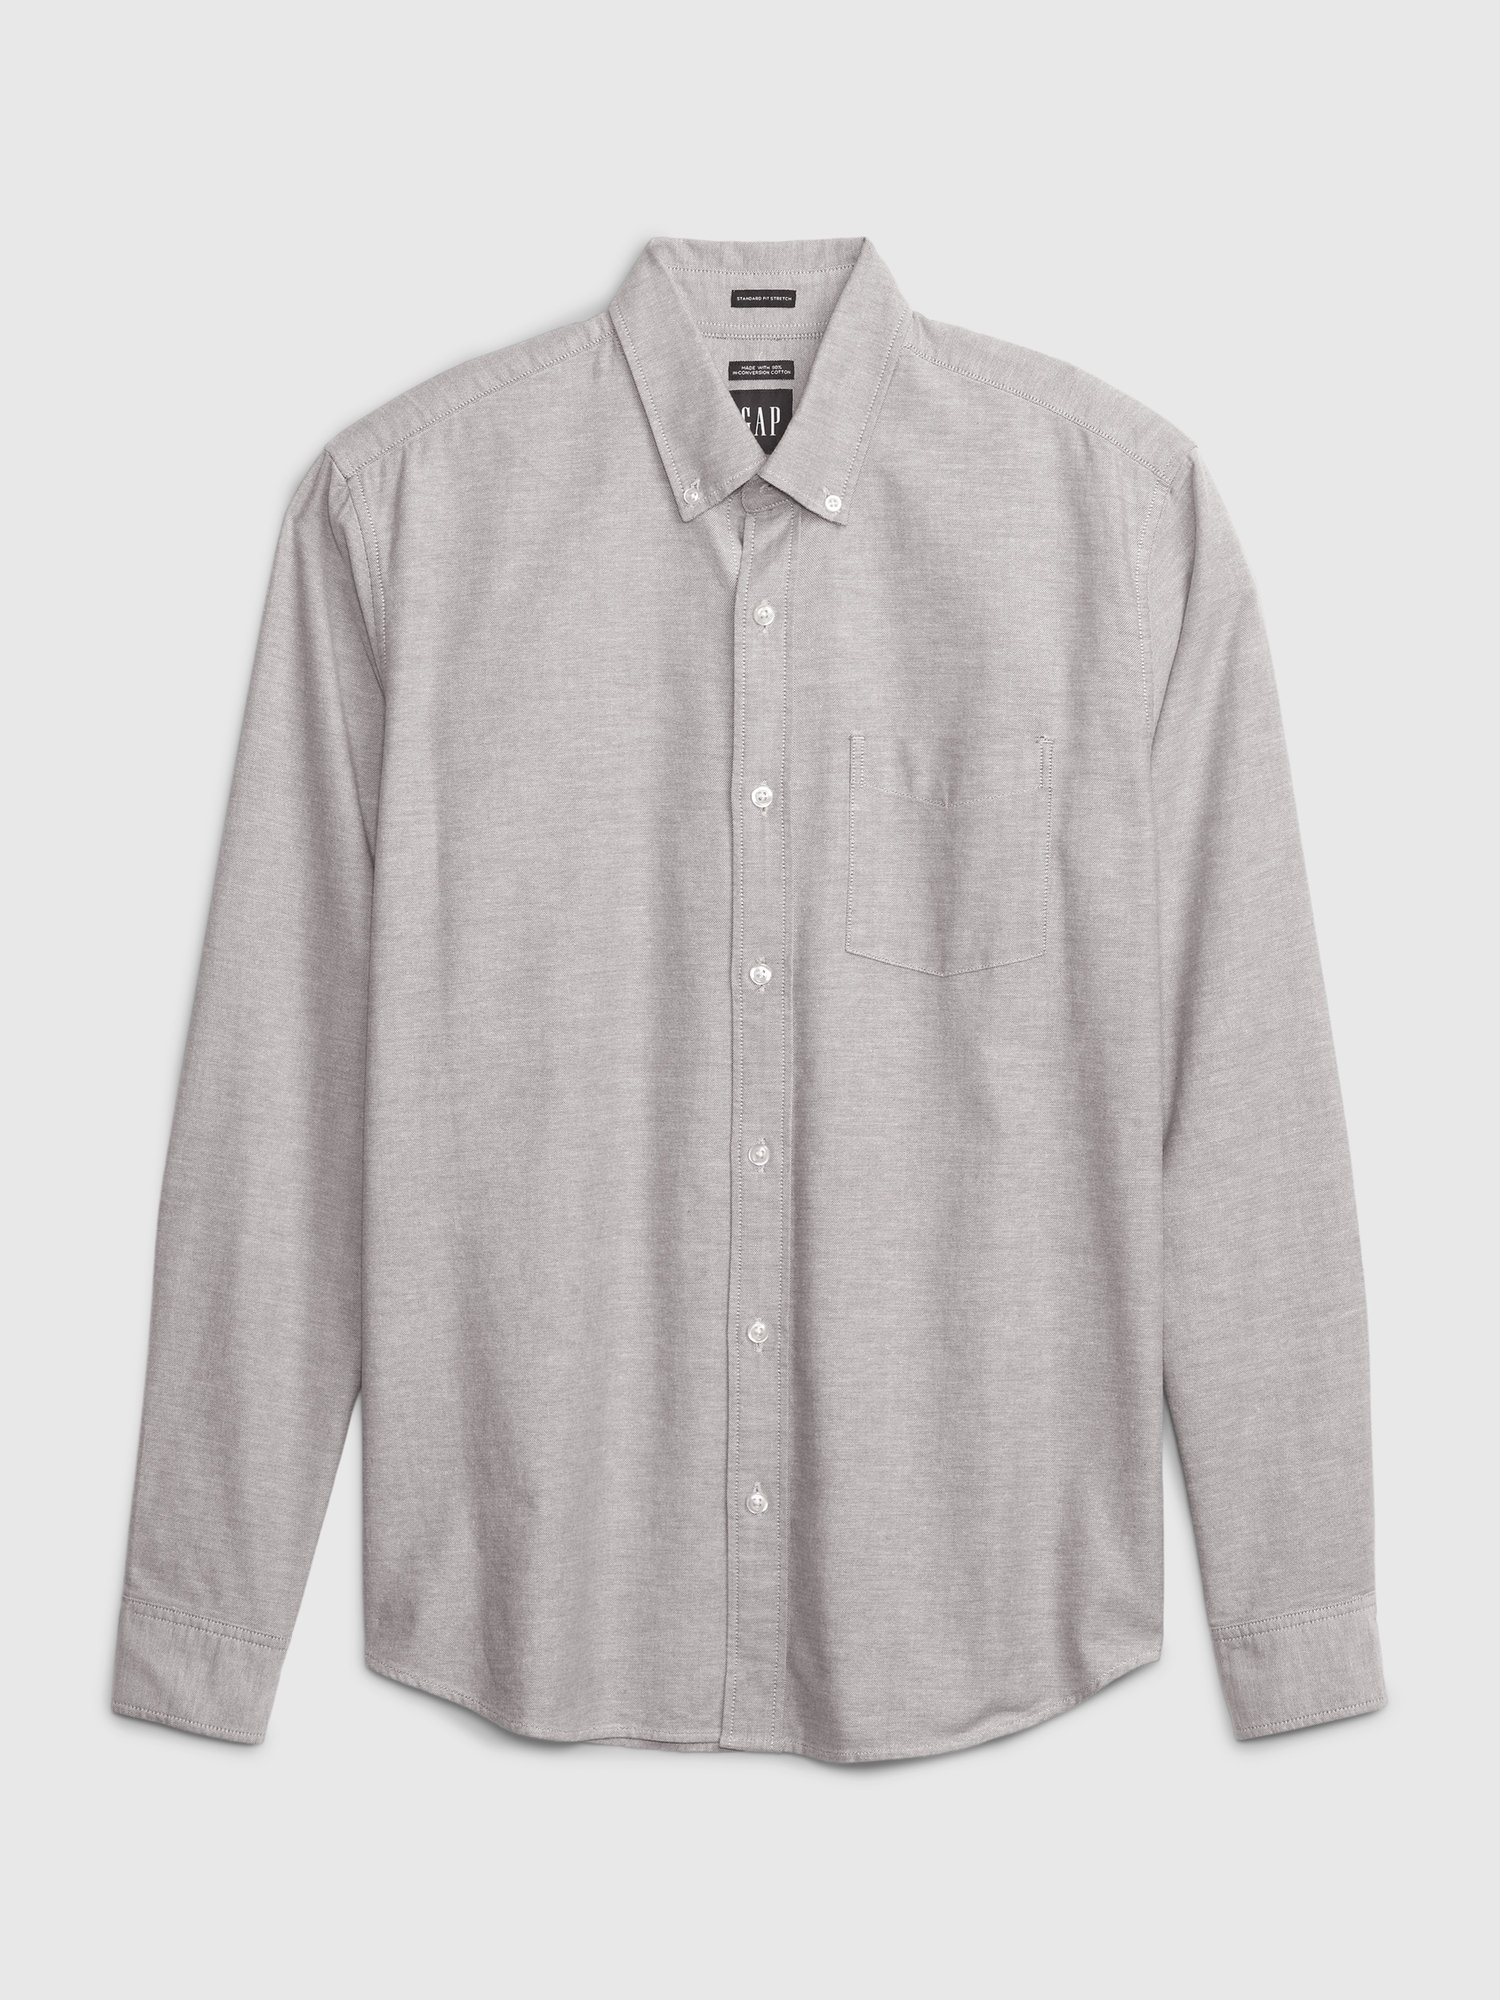 Classic Oxford Shirt in Standard Fit | Gap